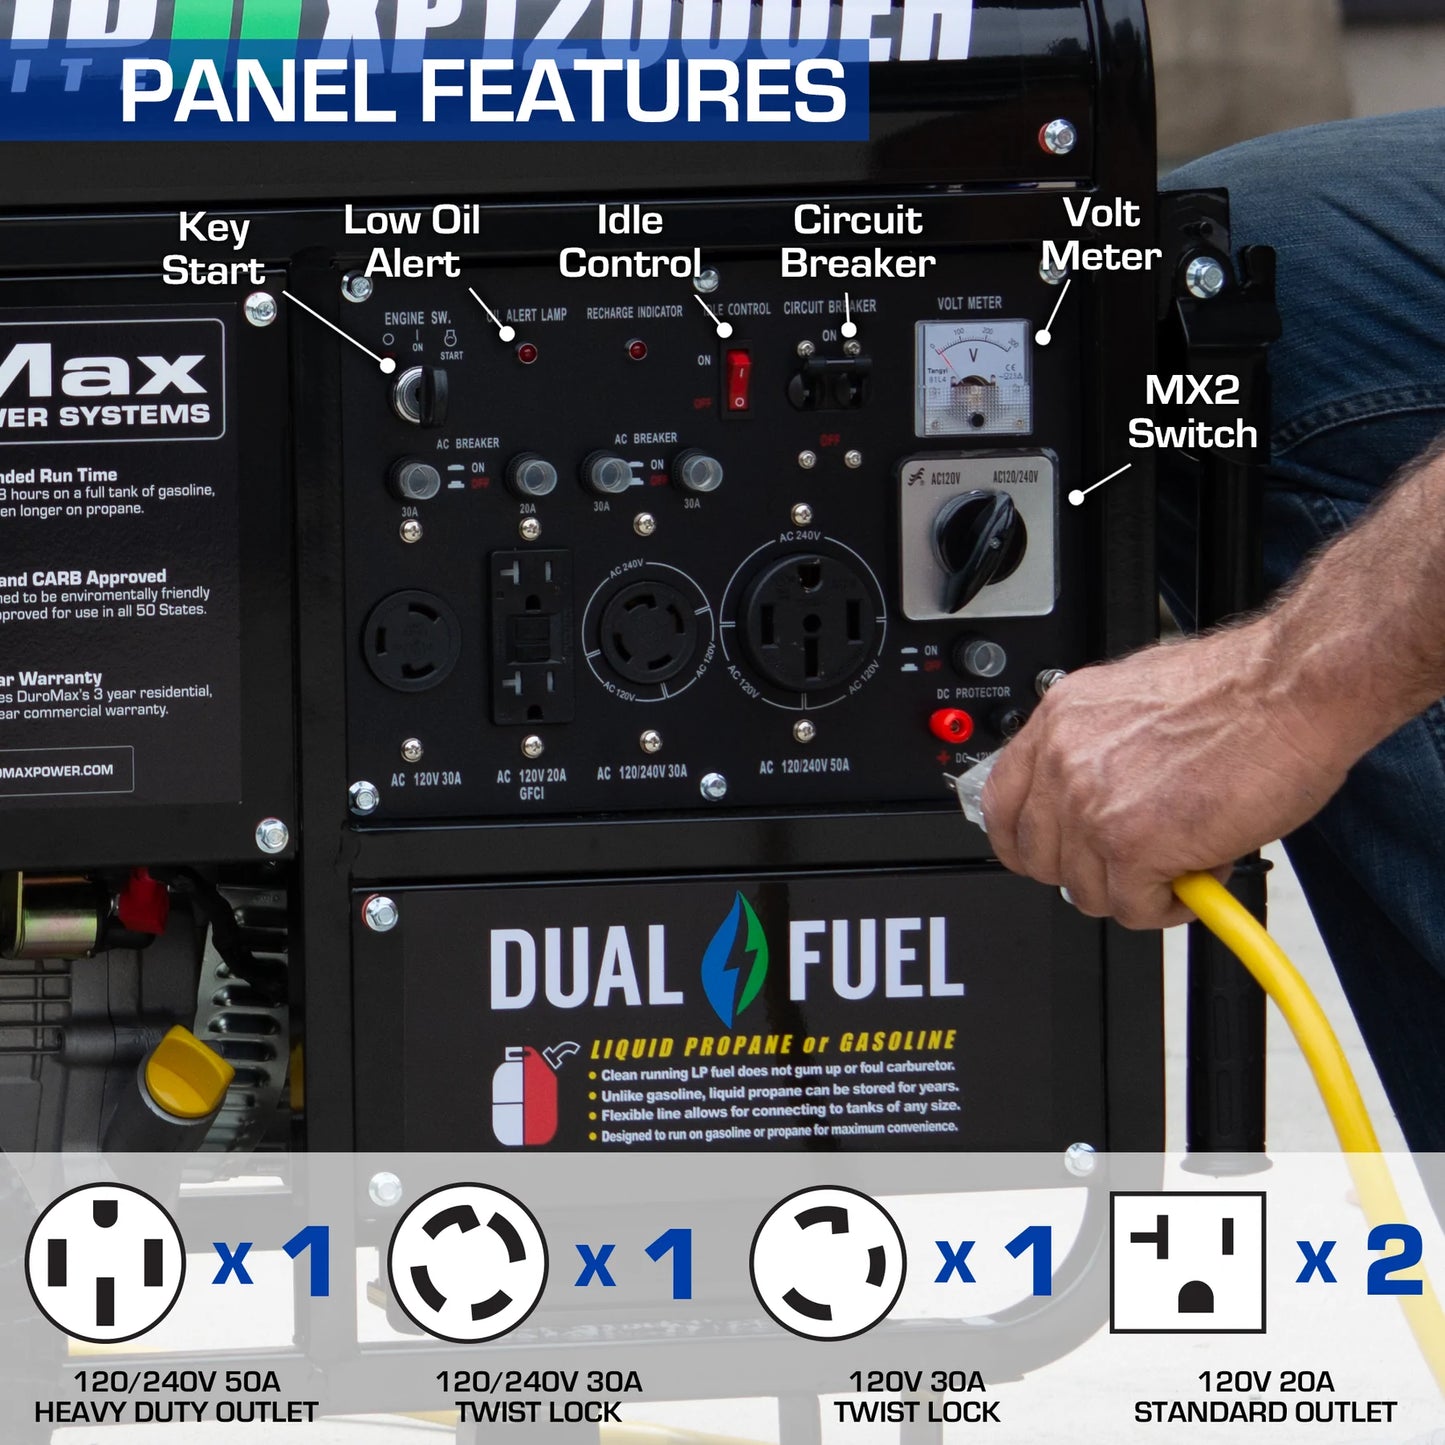 DuroMax XP12000EH 12,000 Watt Dual Fuel Portable Generator